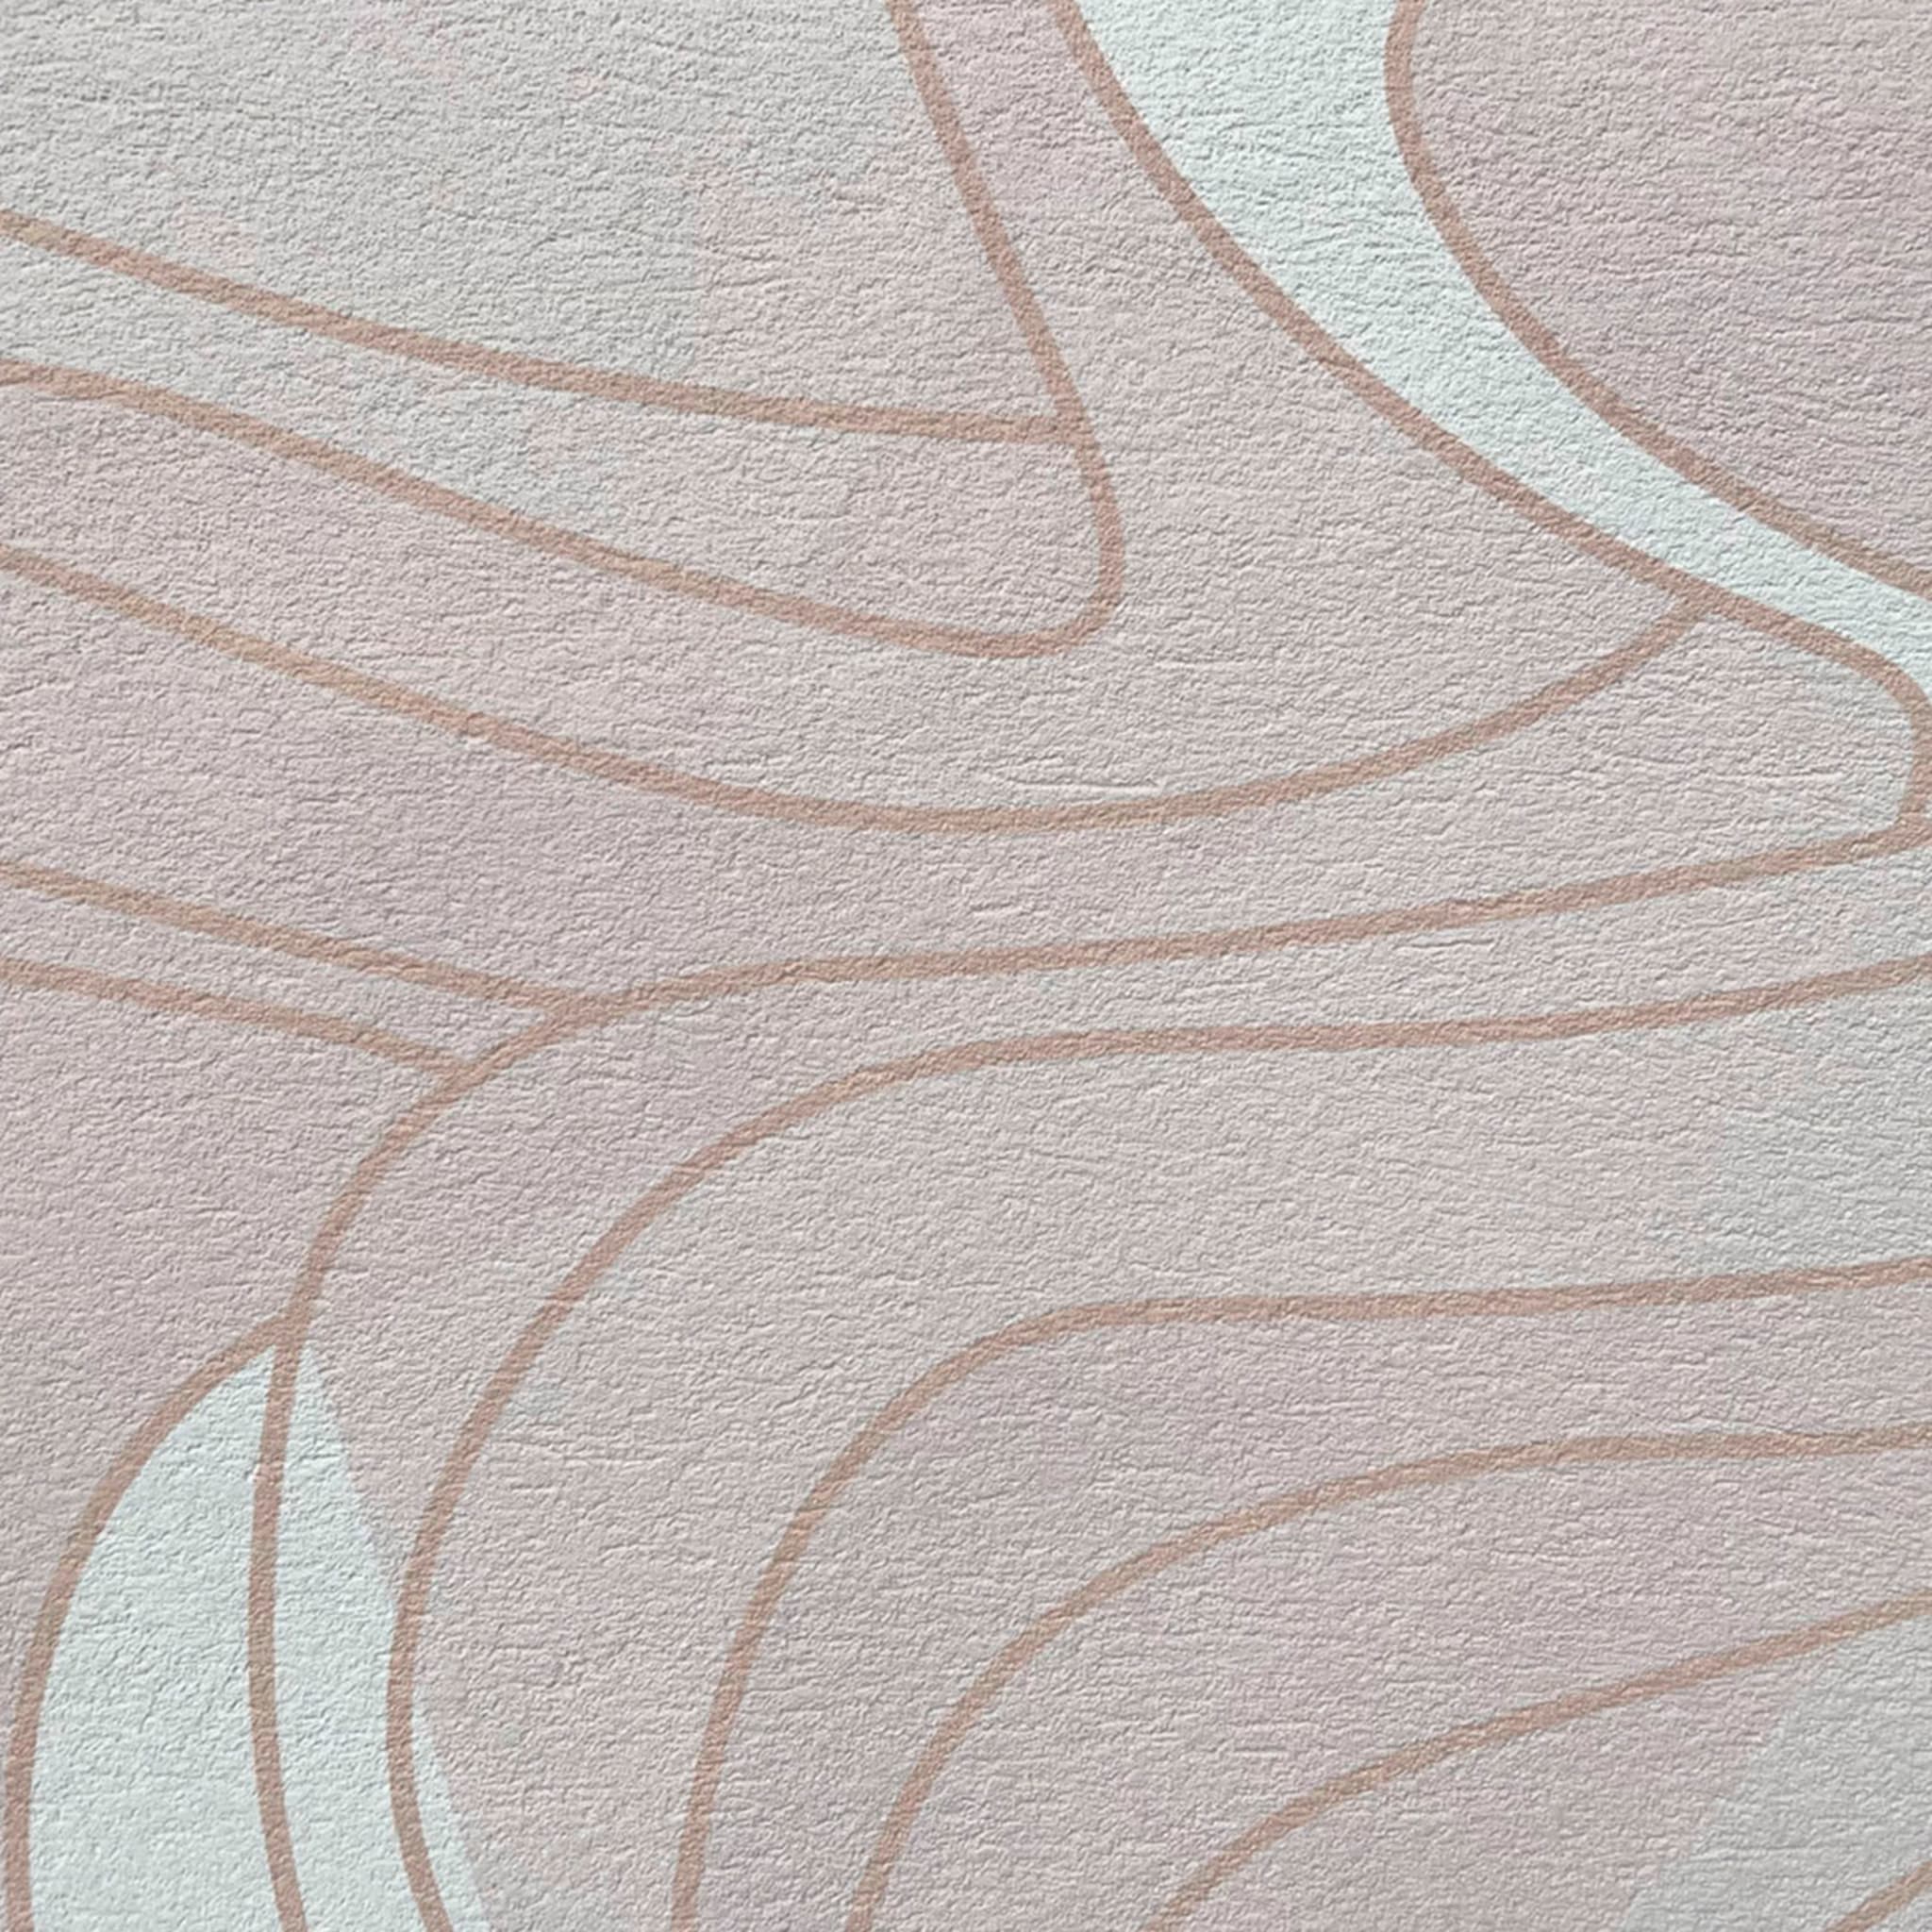 Pink Soft Motion textured wallpaper - Alternative view 1